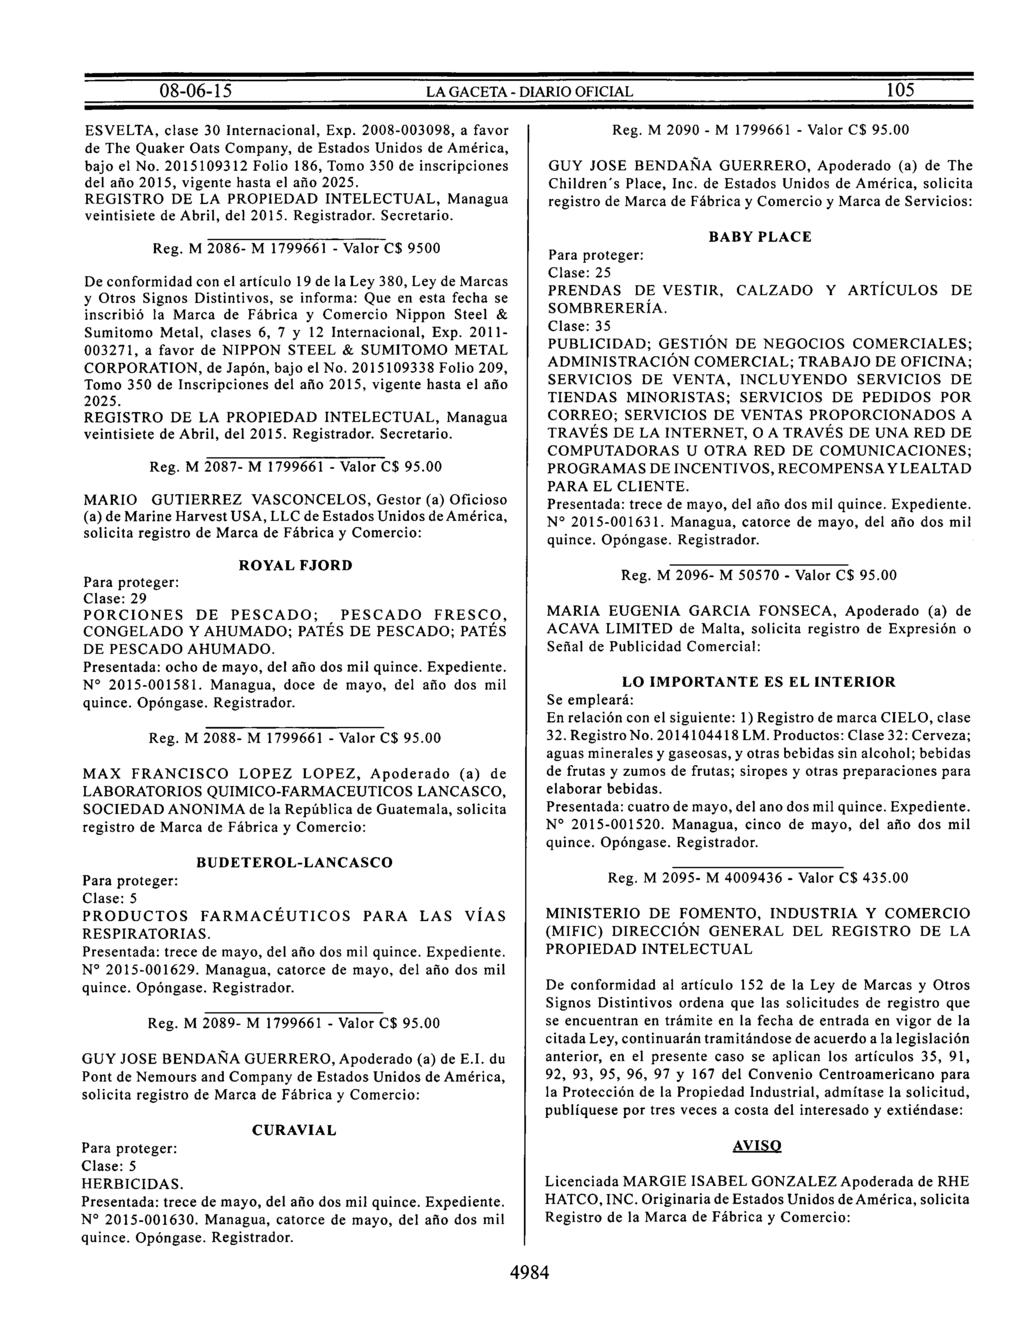 ESVELTA, clase 30 Internacional, Exp. 2008-003098, a favor de The Quaker Oats Company, de Estados Unidos de América, bajo el No.